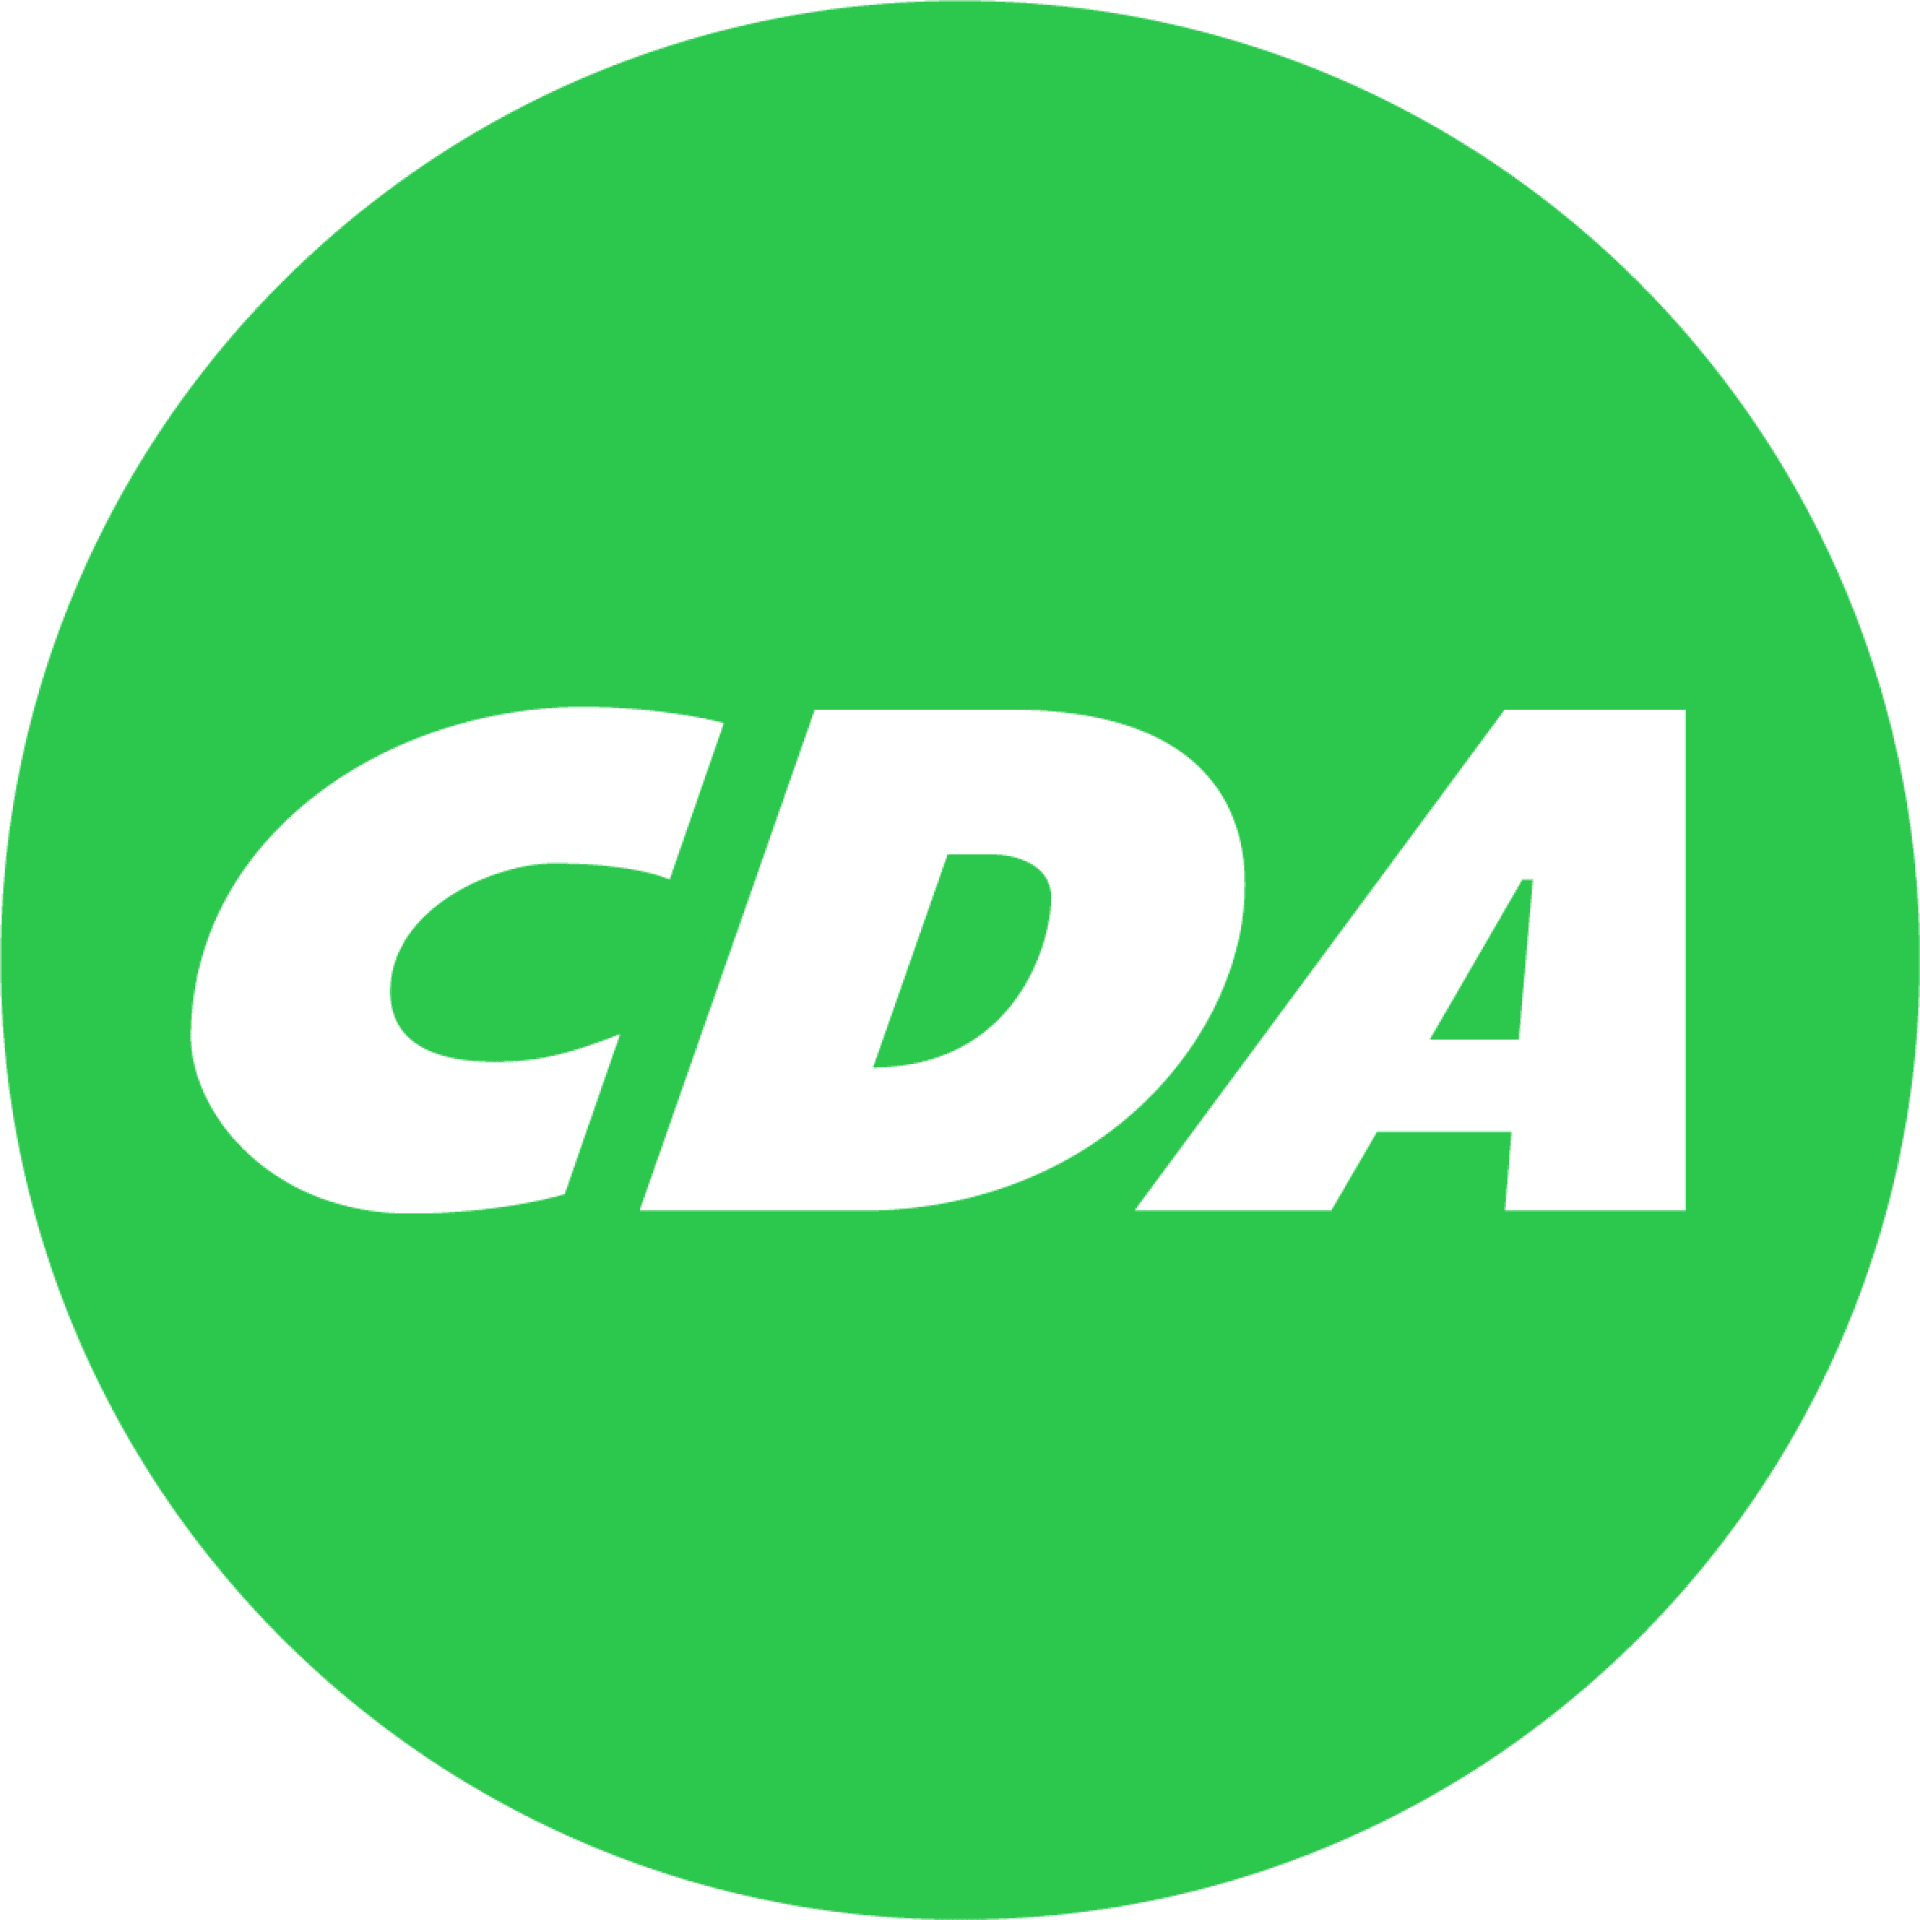 Logo CDA groen